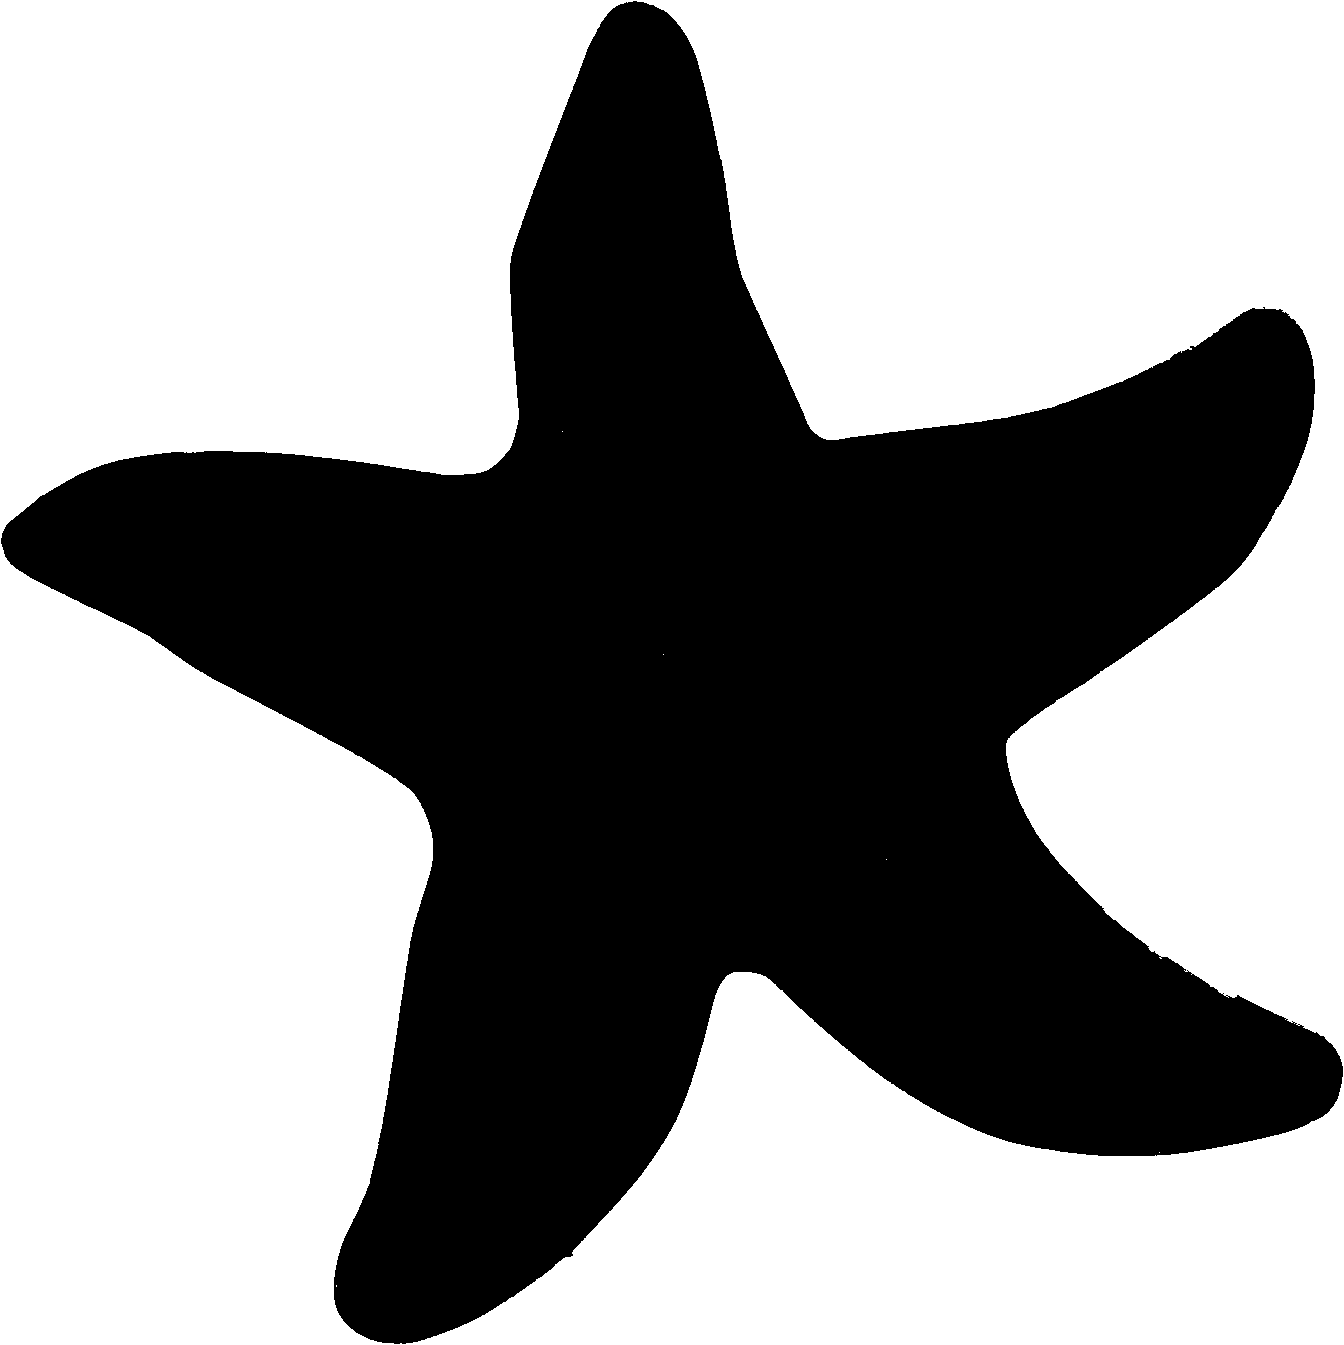 Starfish Clip Art Black And White - Free Clipart ...